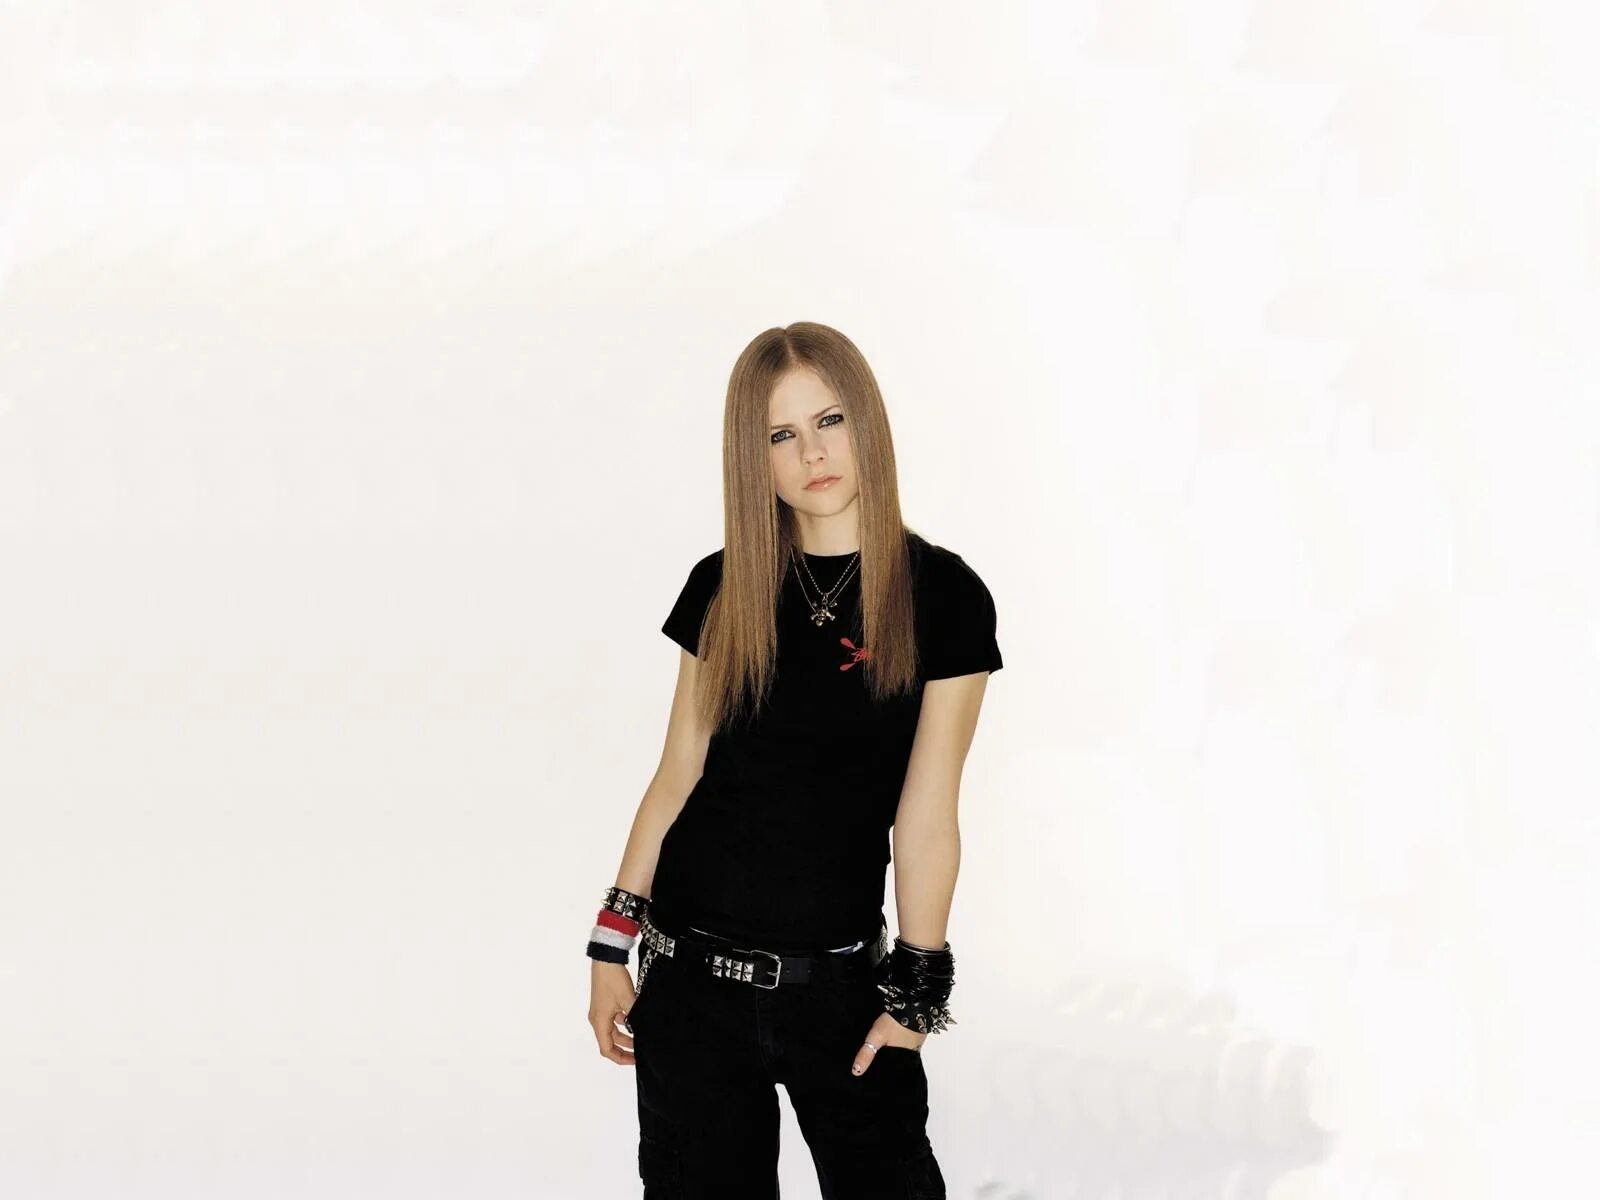 Avril Lavigne Skater boy. Аврил Лавин скейтер. Аврил Лавин скейтер бой. Avril Lavigne sk8er boi обложка. Avril lavigne boi